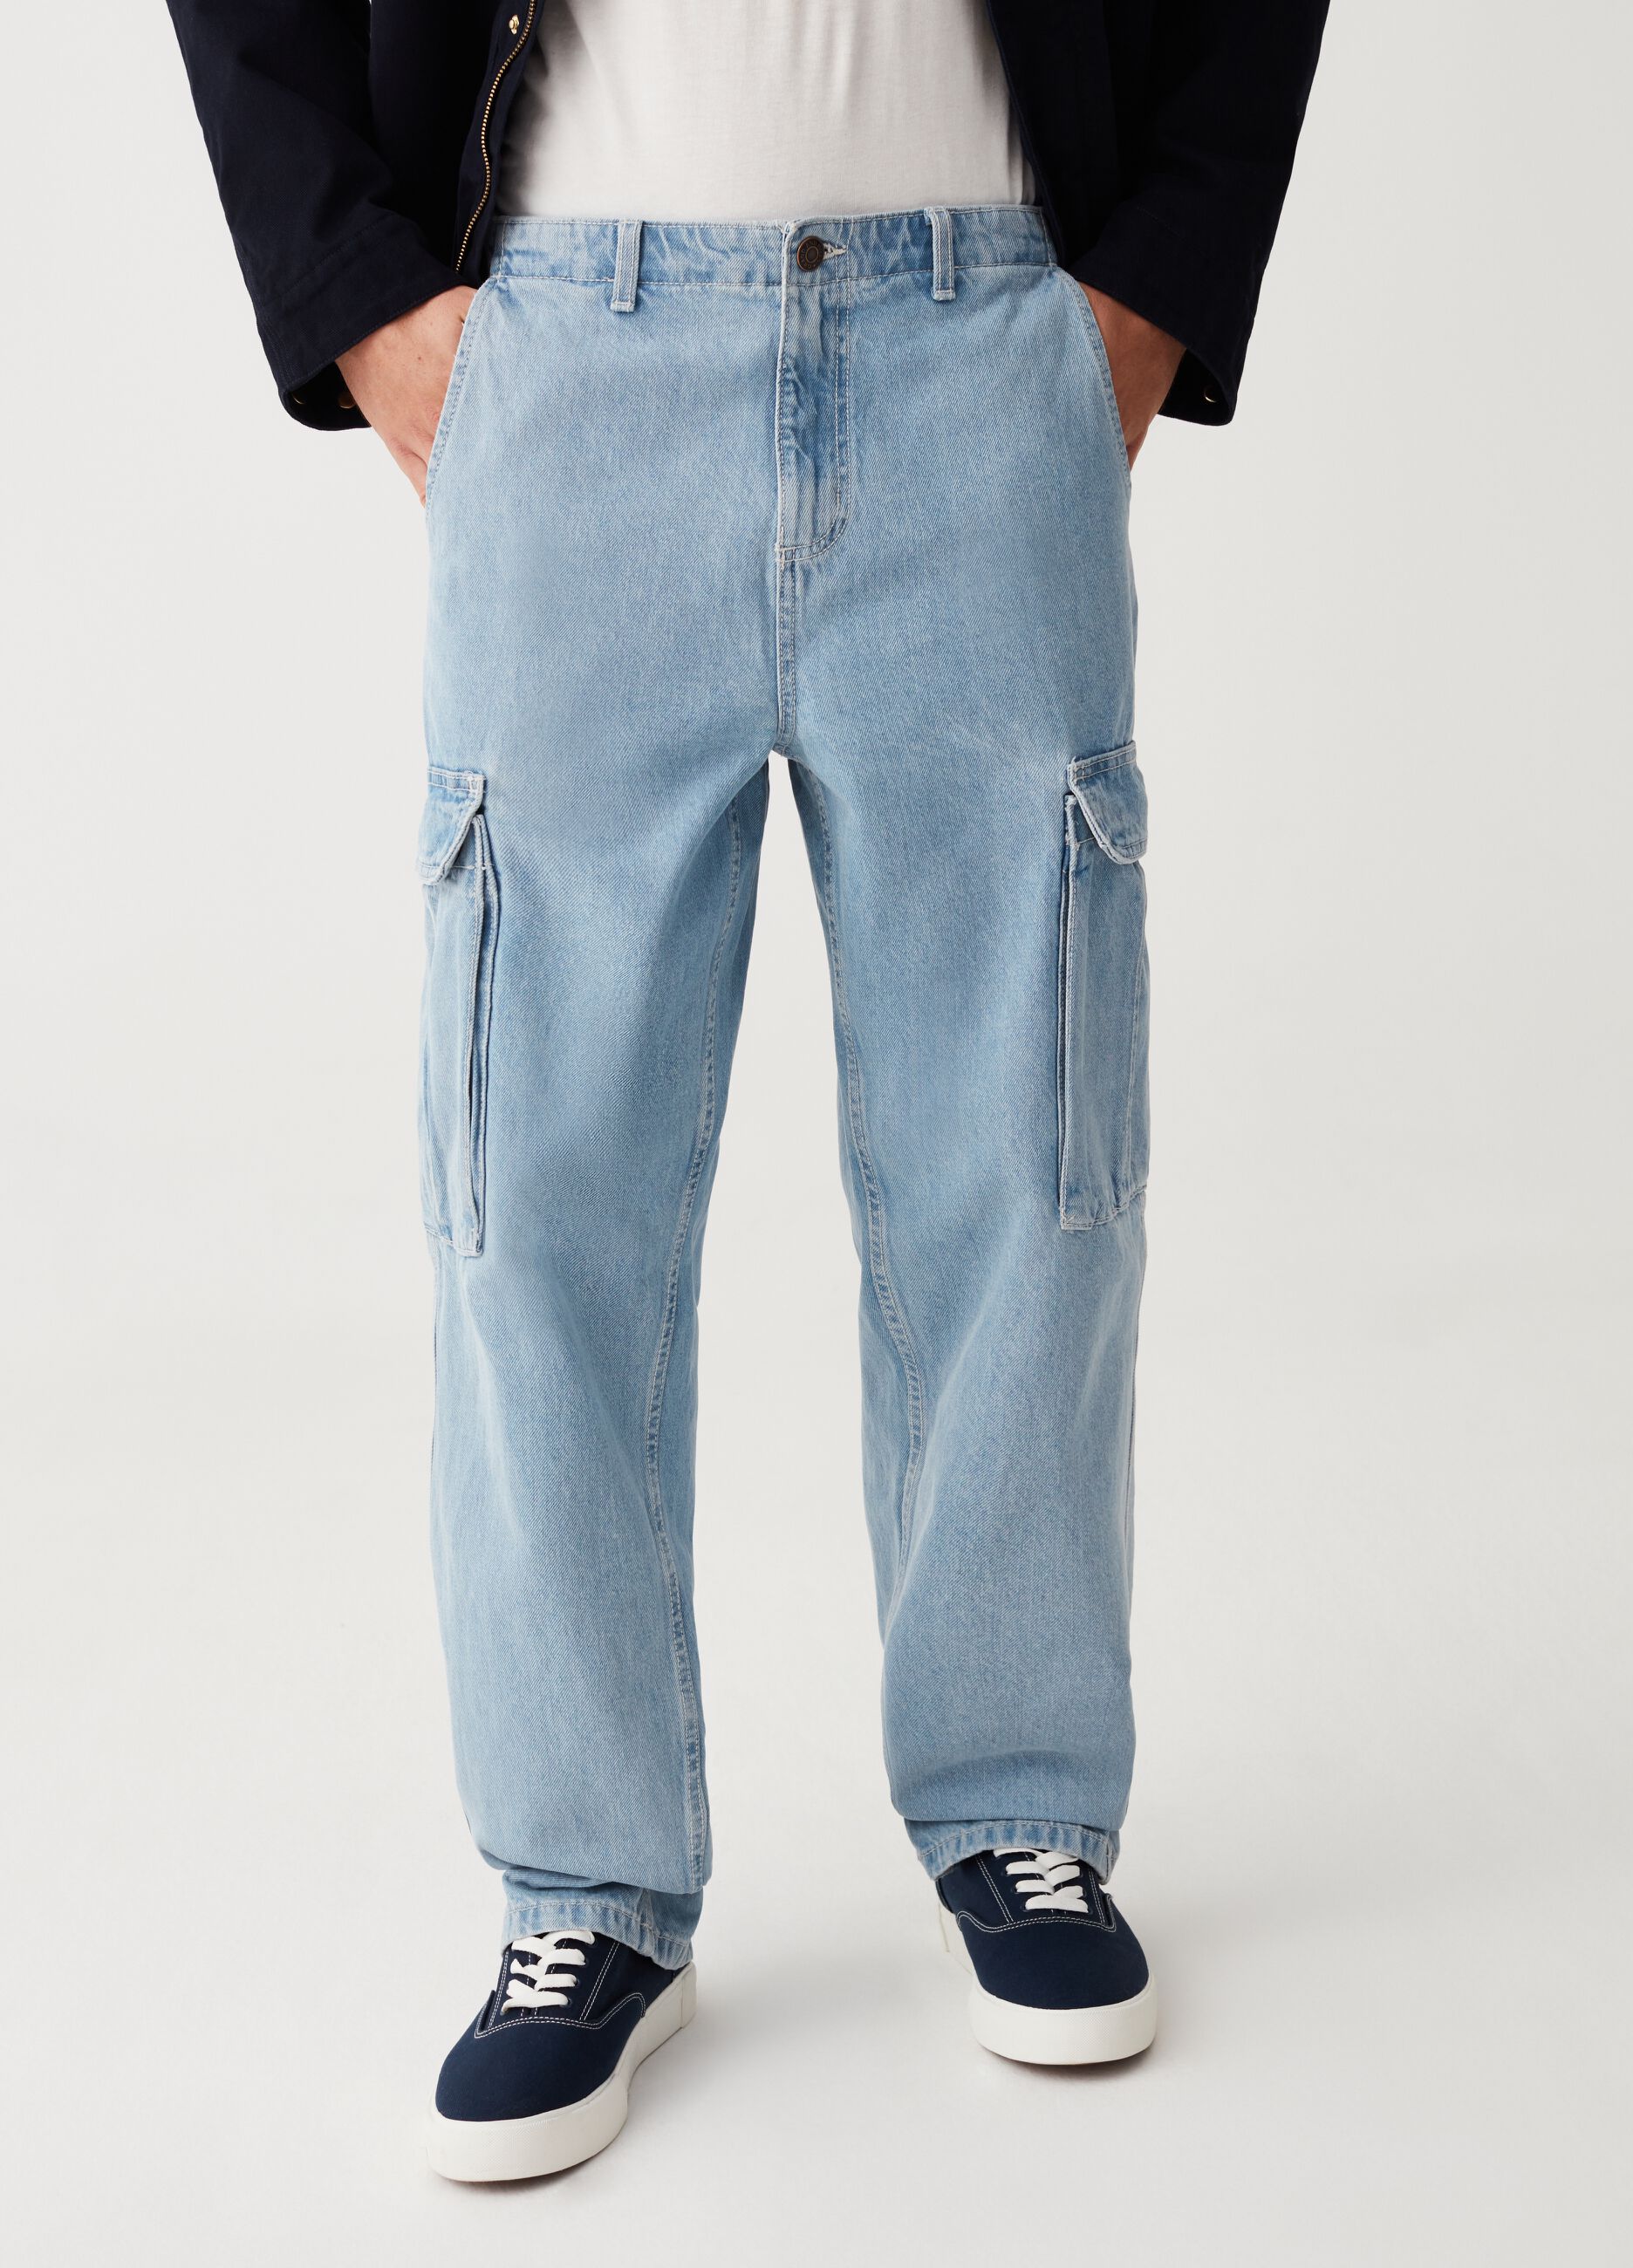 MakeYourOwnJeans Carpenter Style Cargo Denim Jeans